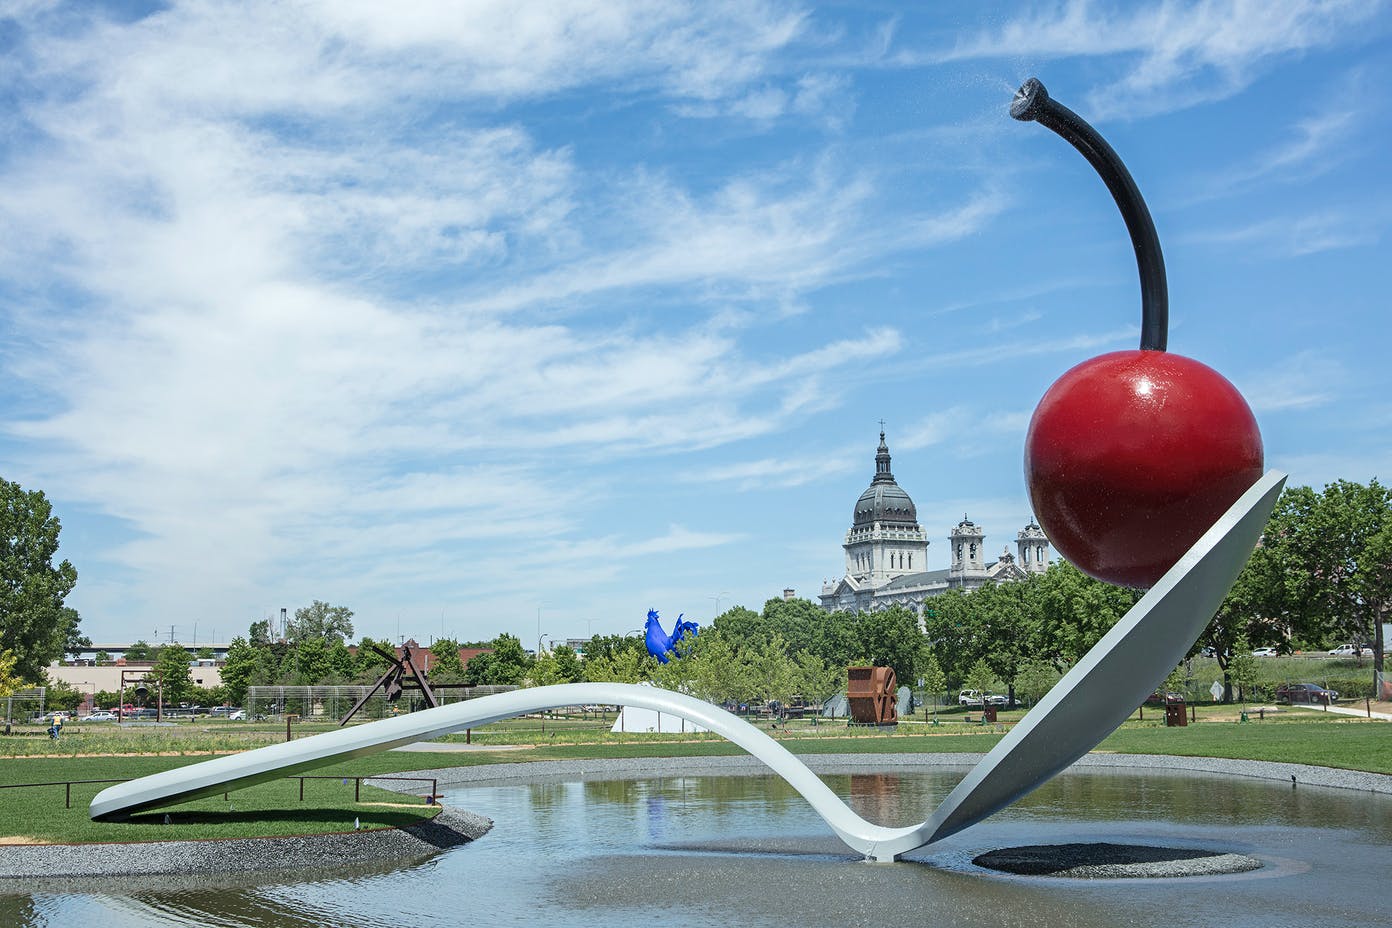 Visit The Minneapolis Sculpture Garden